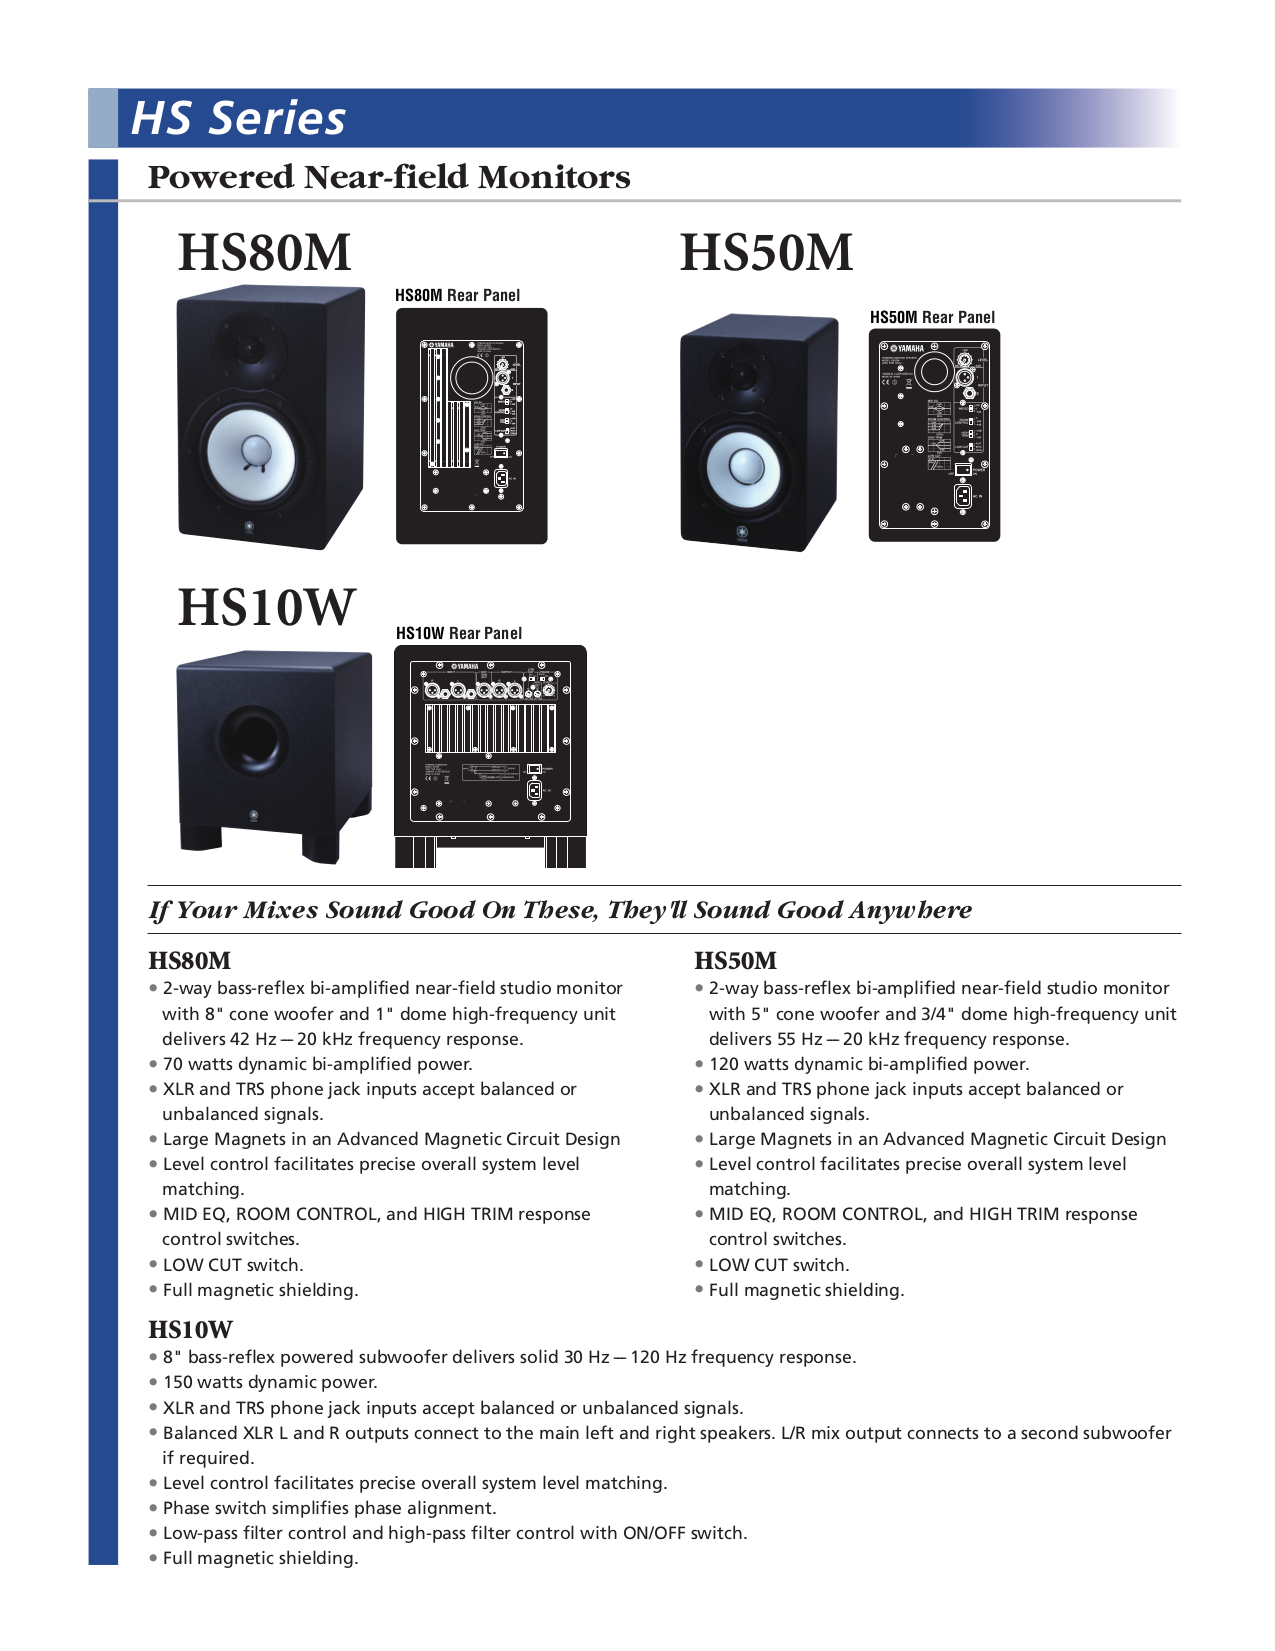 HS50M MANUAL PDF